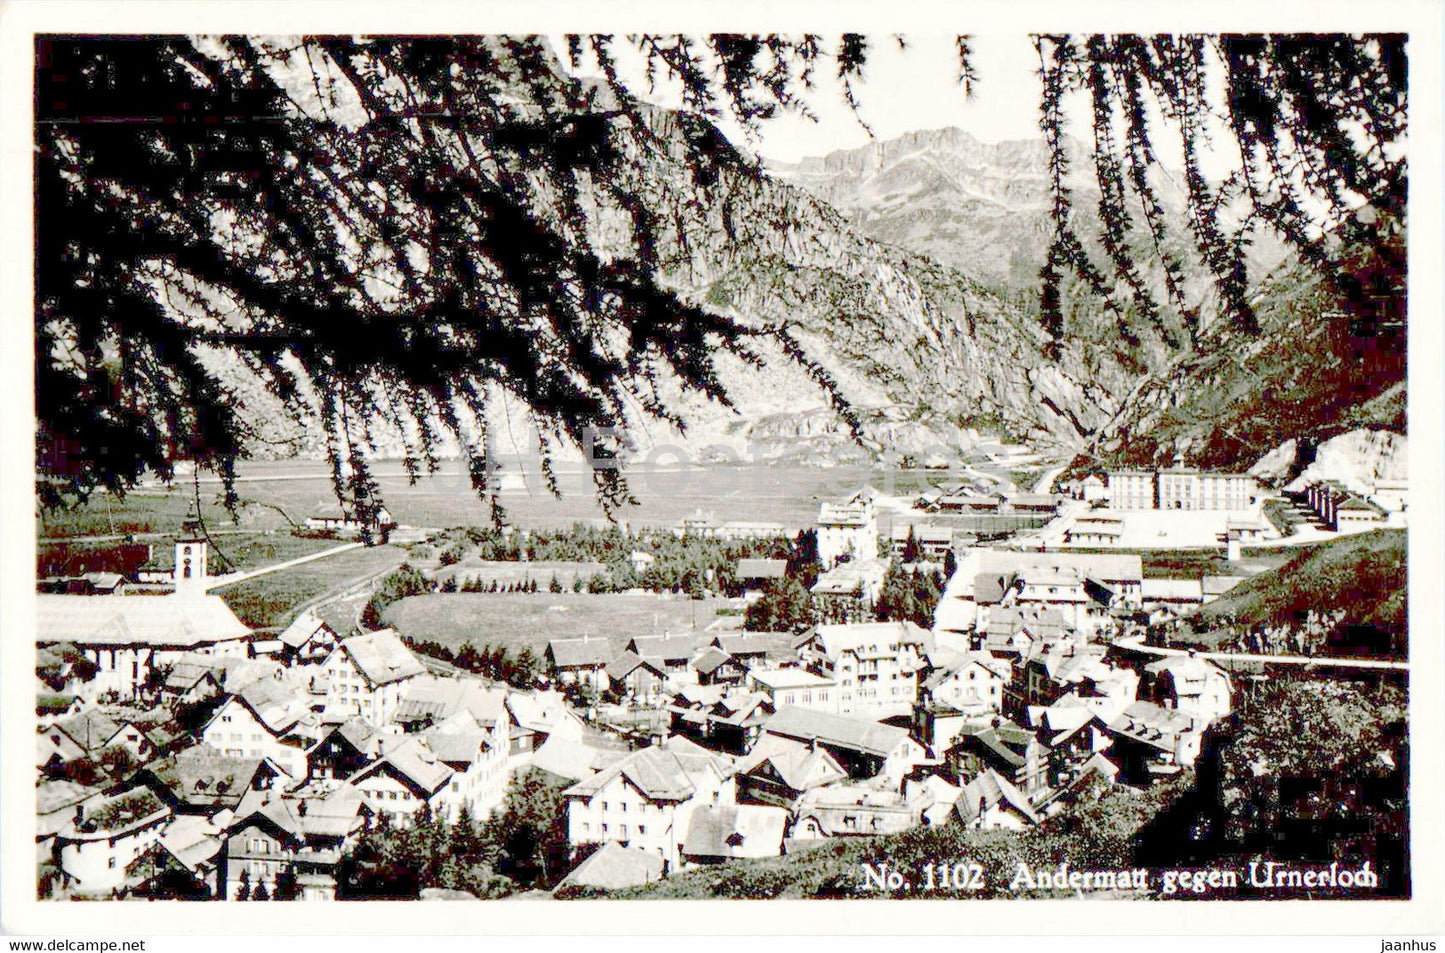 Andermatt gegen Urnerloch - 1102 - Feldpost - military mail - old postcard - Switzerland - used - JH Postcards